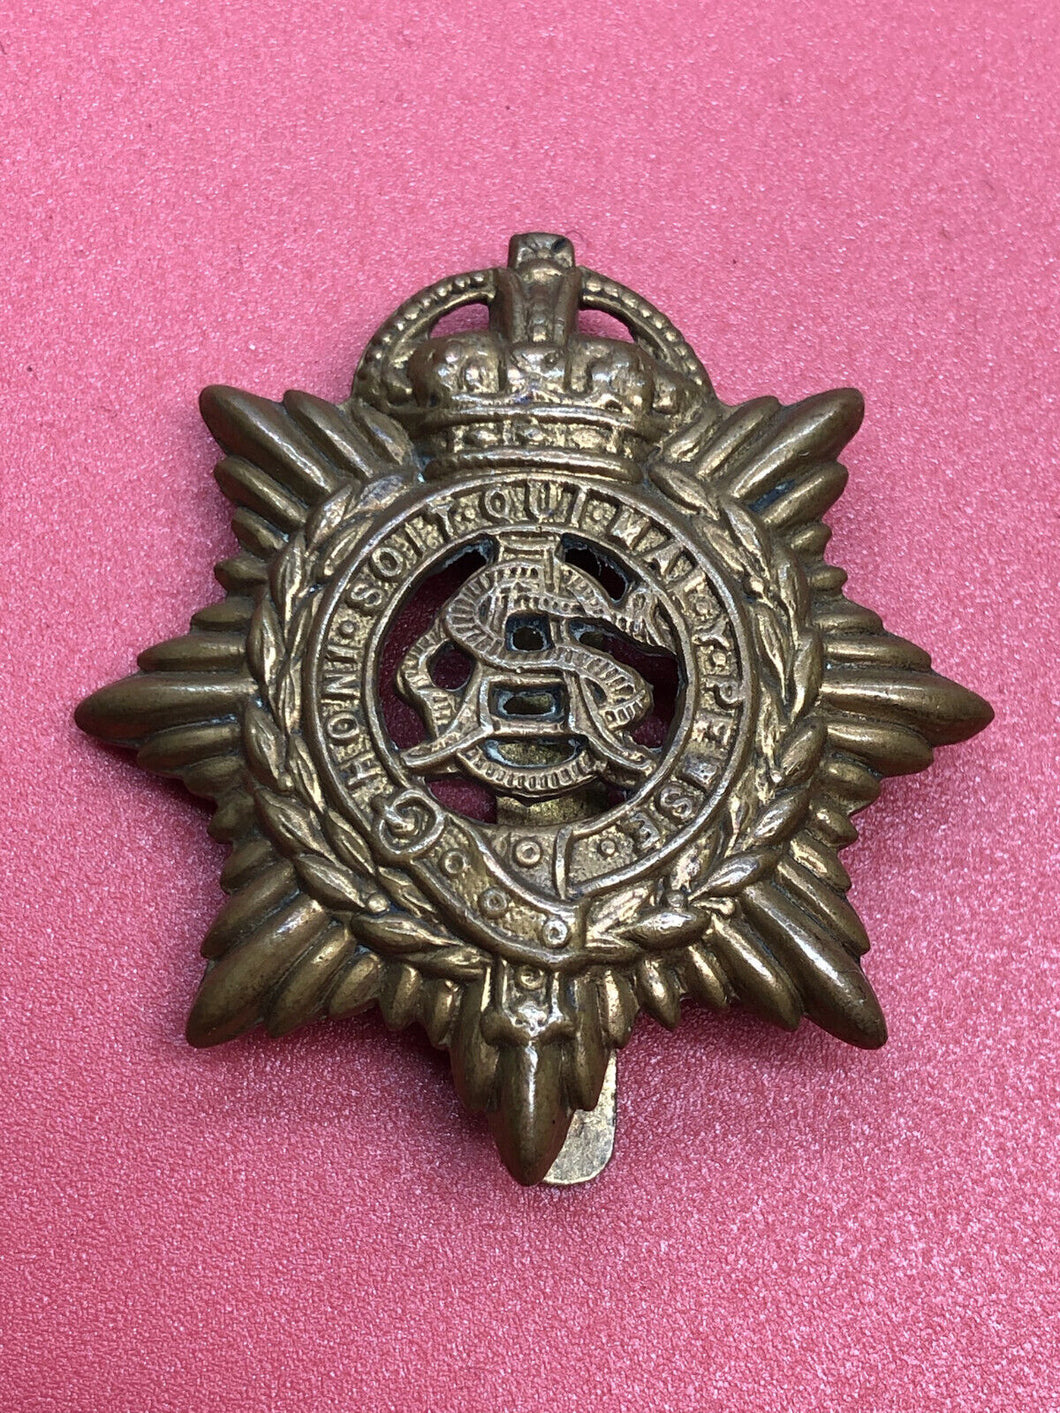 Original WW1 British Army Cap Badge - Royal Army Service Corps RASC